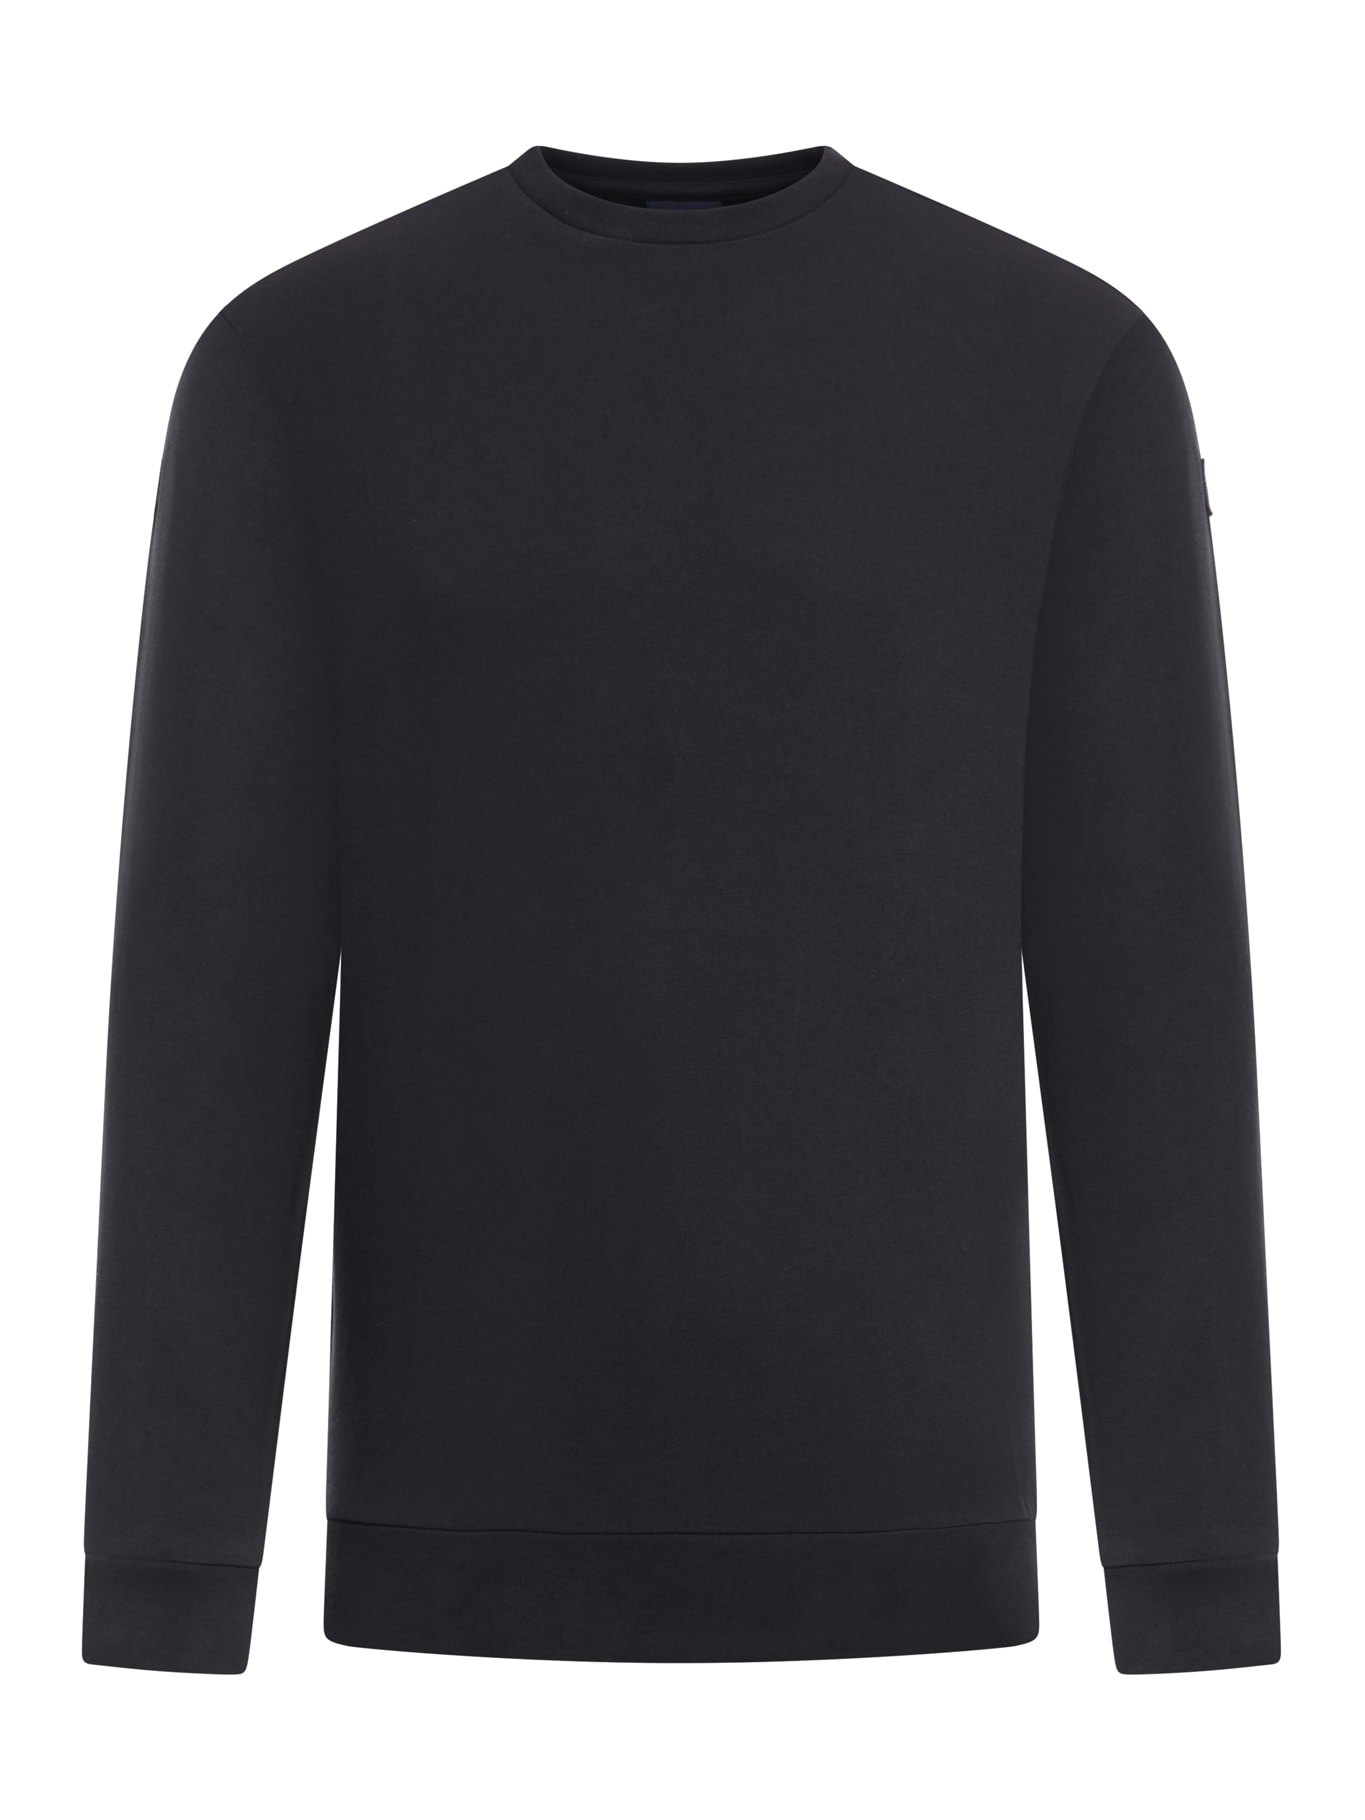 Paul&amp;shark Sweatshirt Cotton In Black